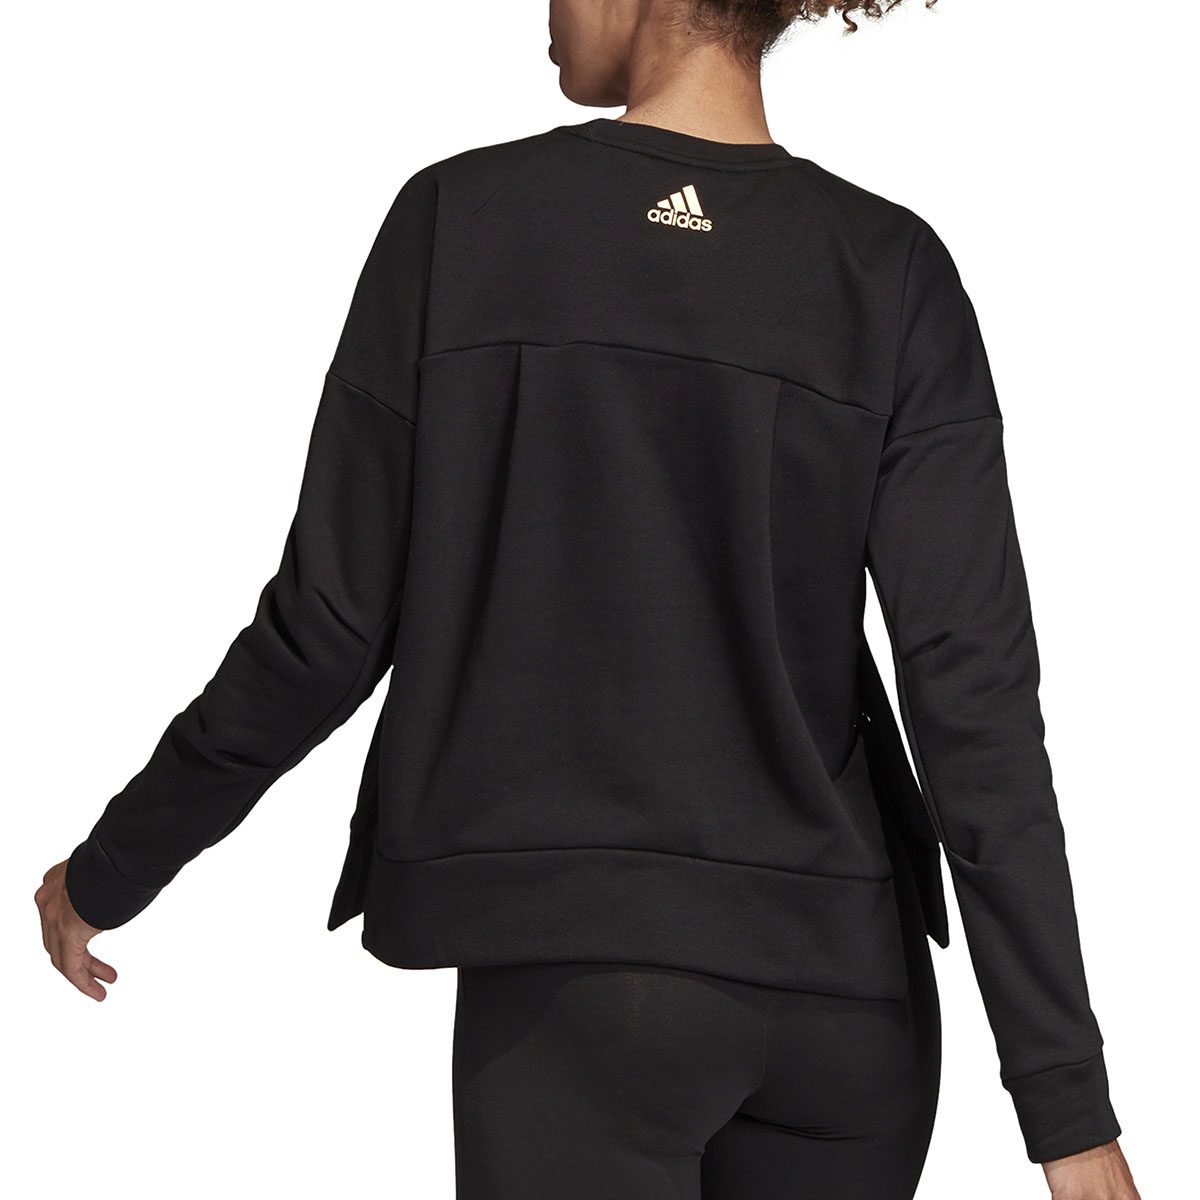 Adidas Women's ID Glam Black Sweatshirt 